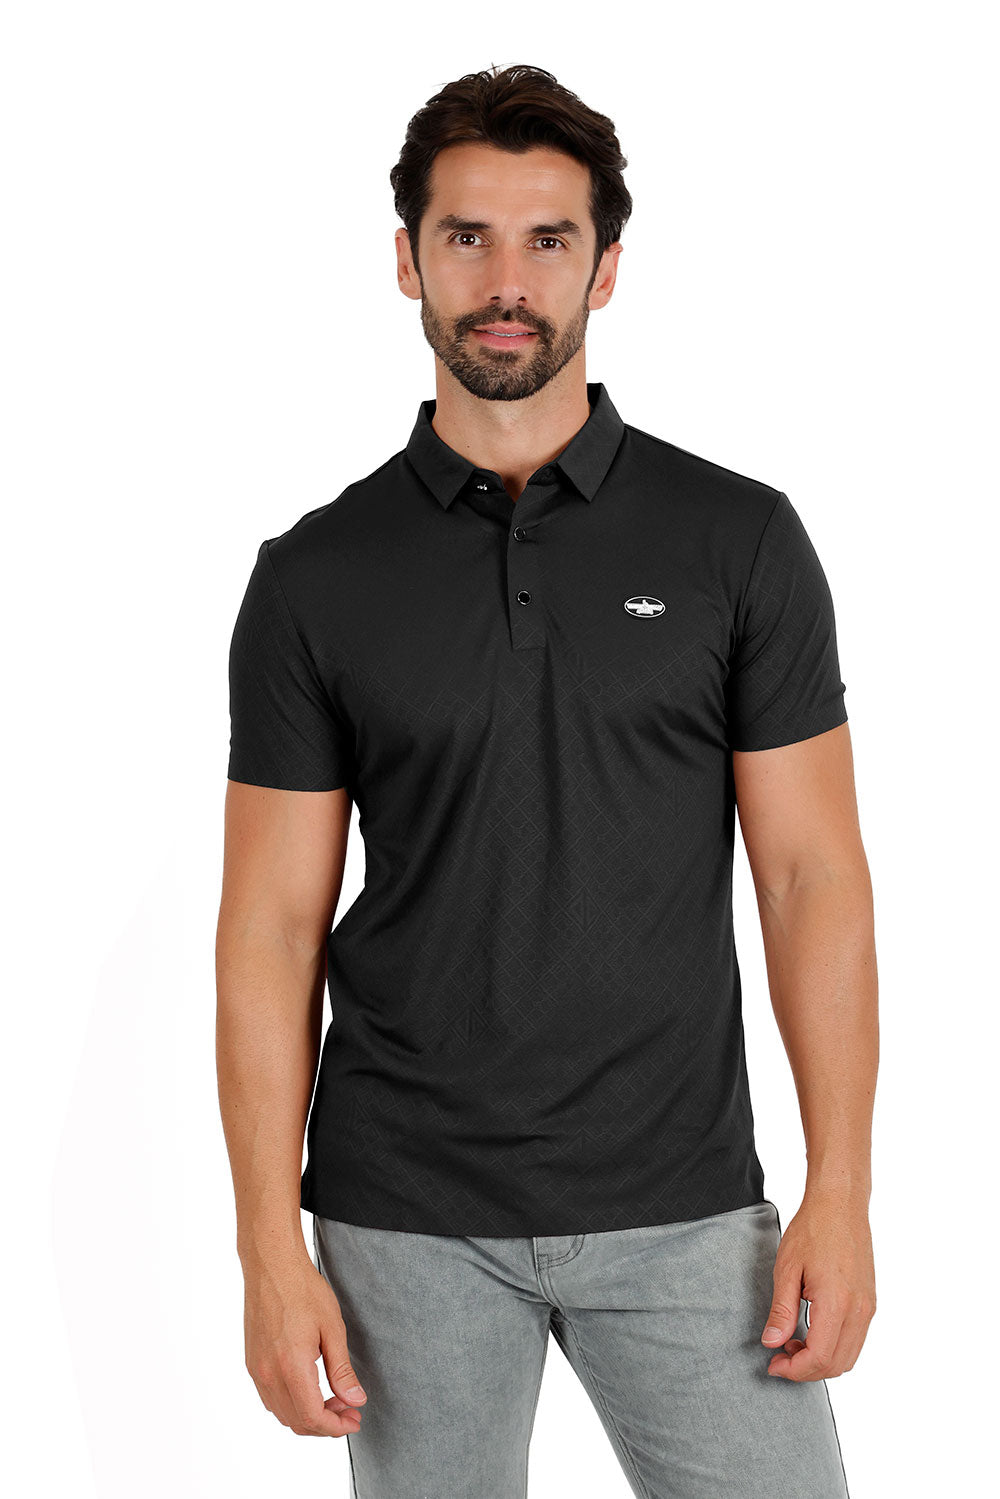 Barabas Men's Premium Solid Diamond  Polo Short Sleeve Shirts 3P07 Black